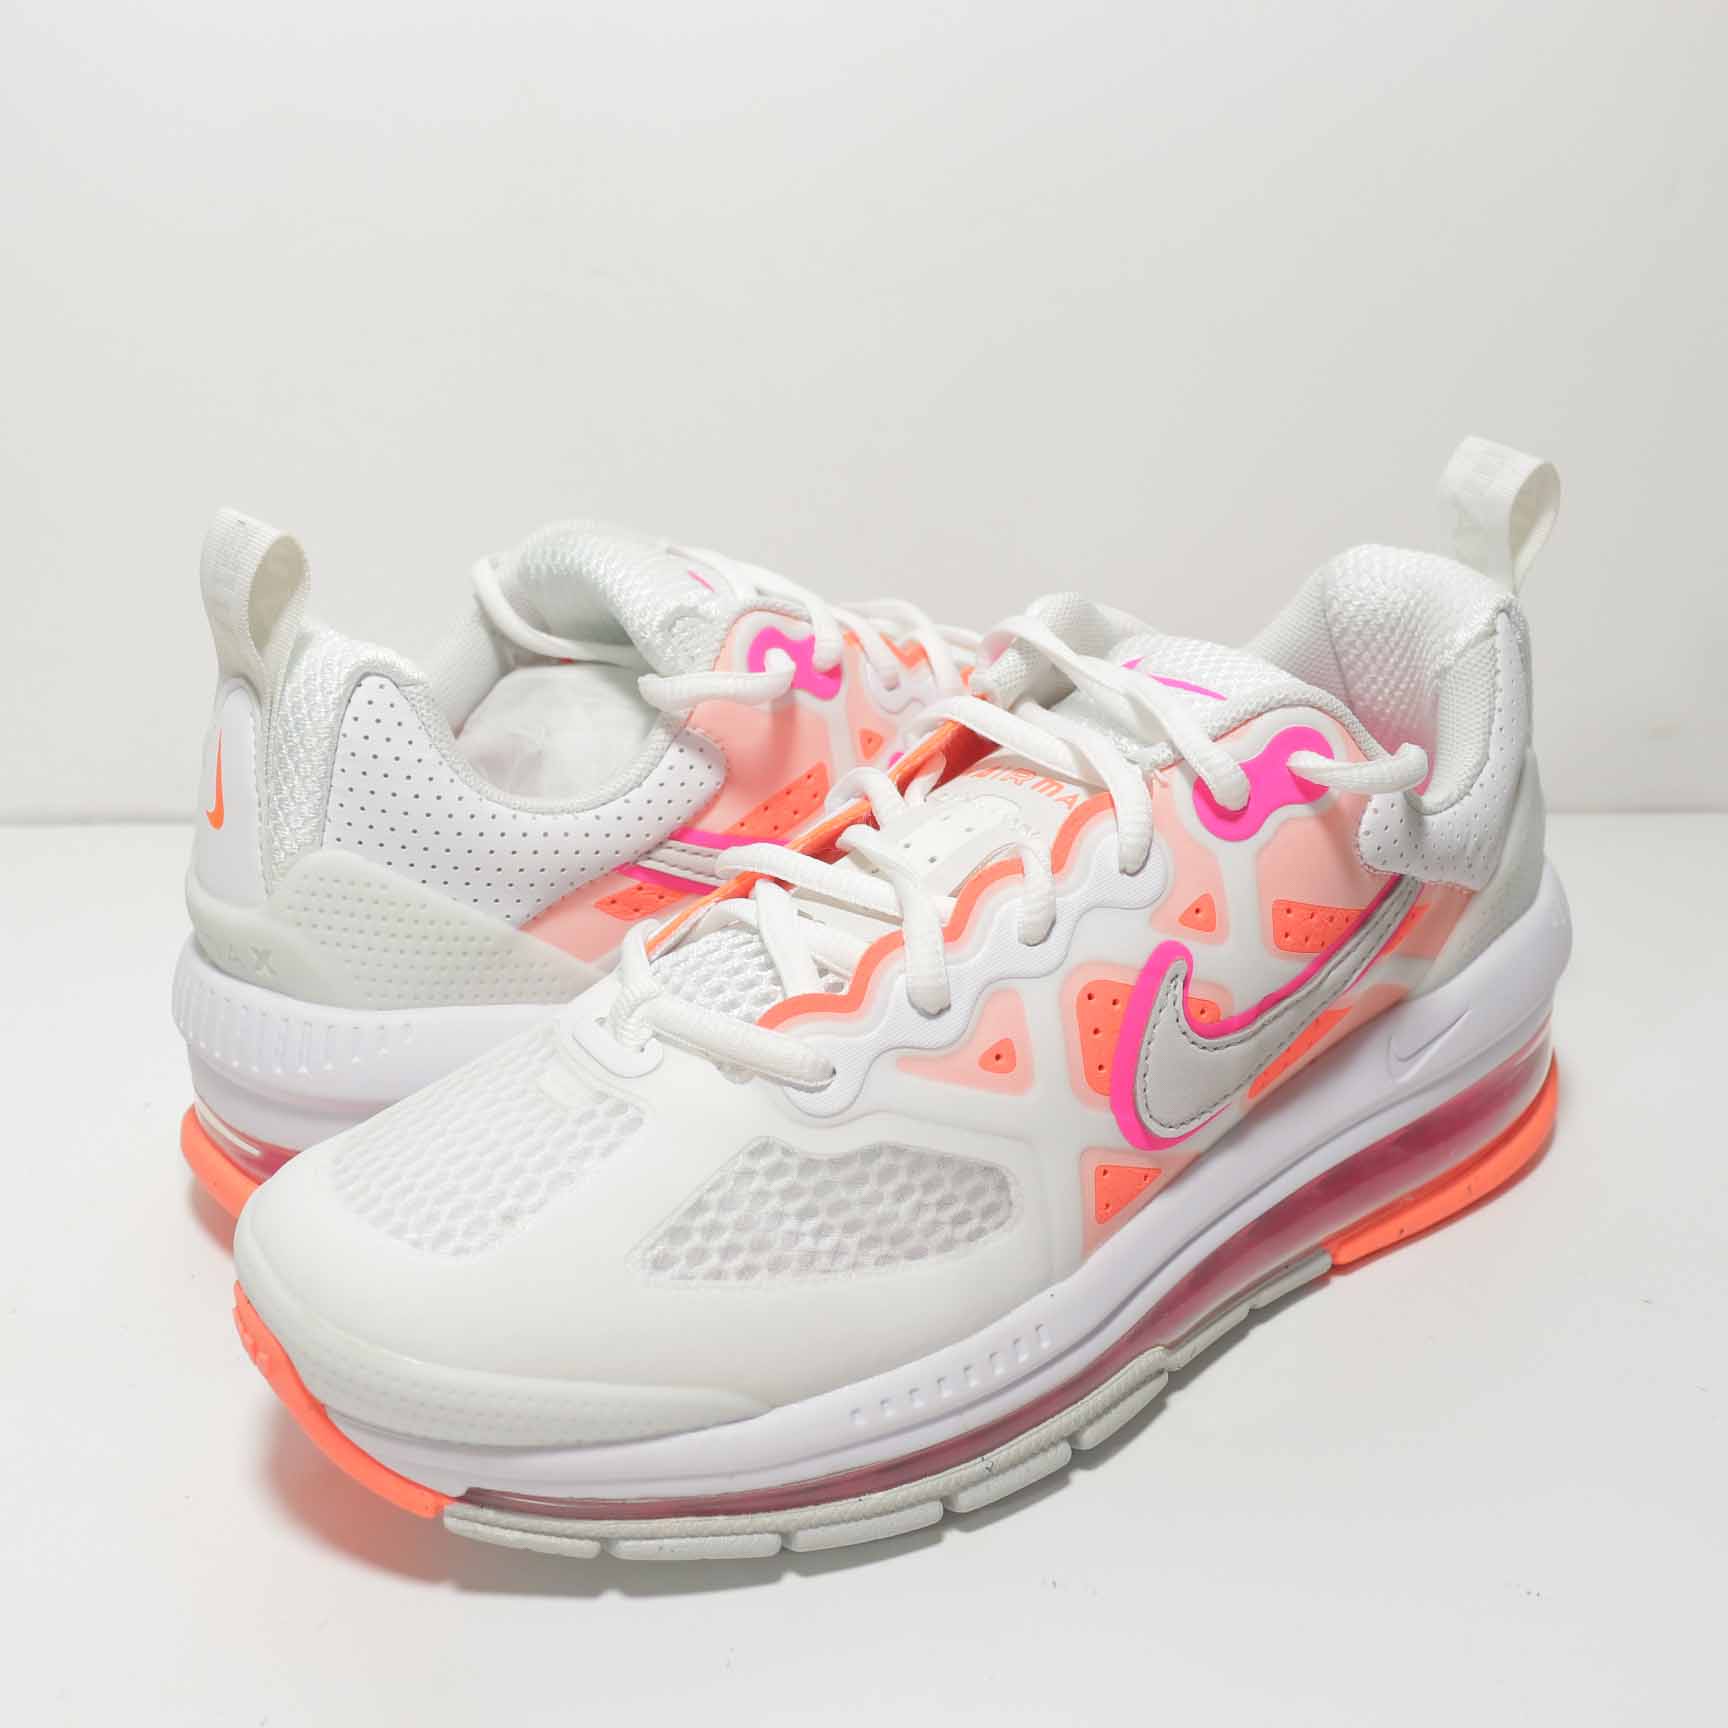 Nike Air Max Genome White Peach Orange Shoes